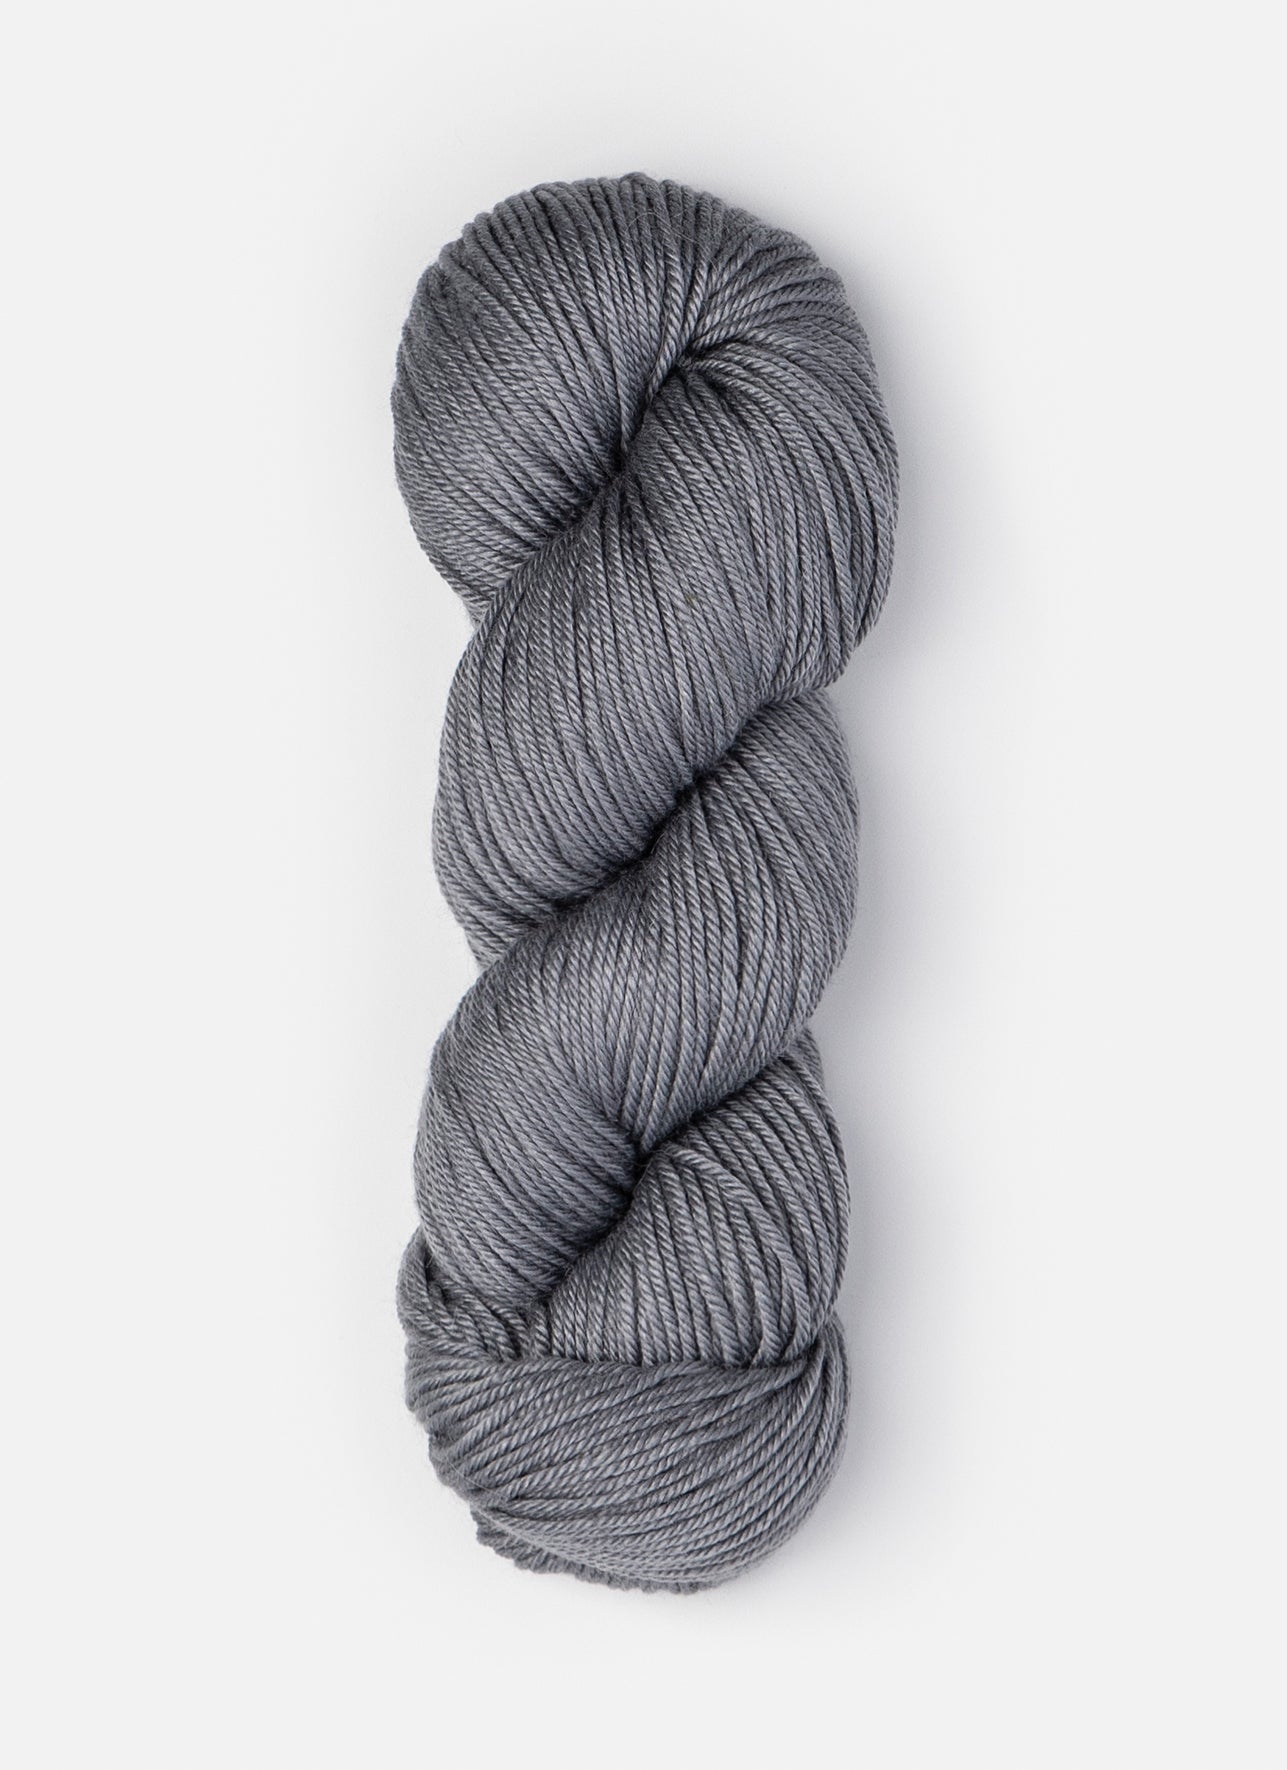 Knit Along - Blue Sky Fibers - Pacific Grove Top  (Medium Size)